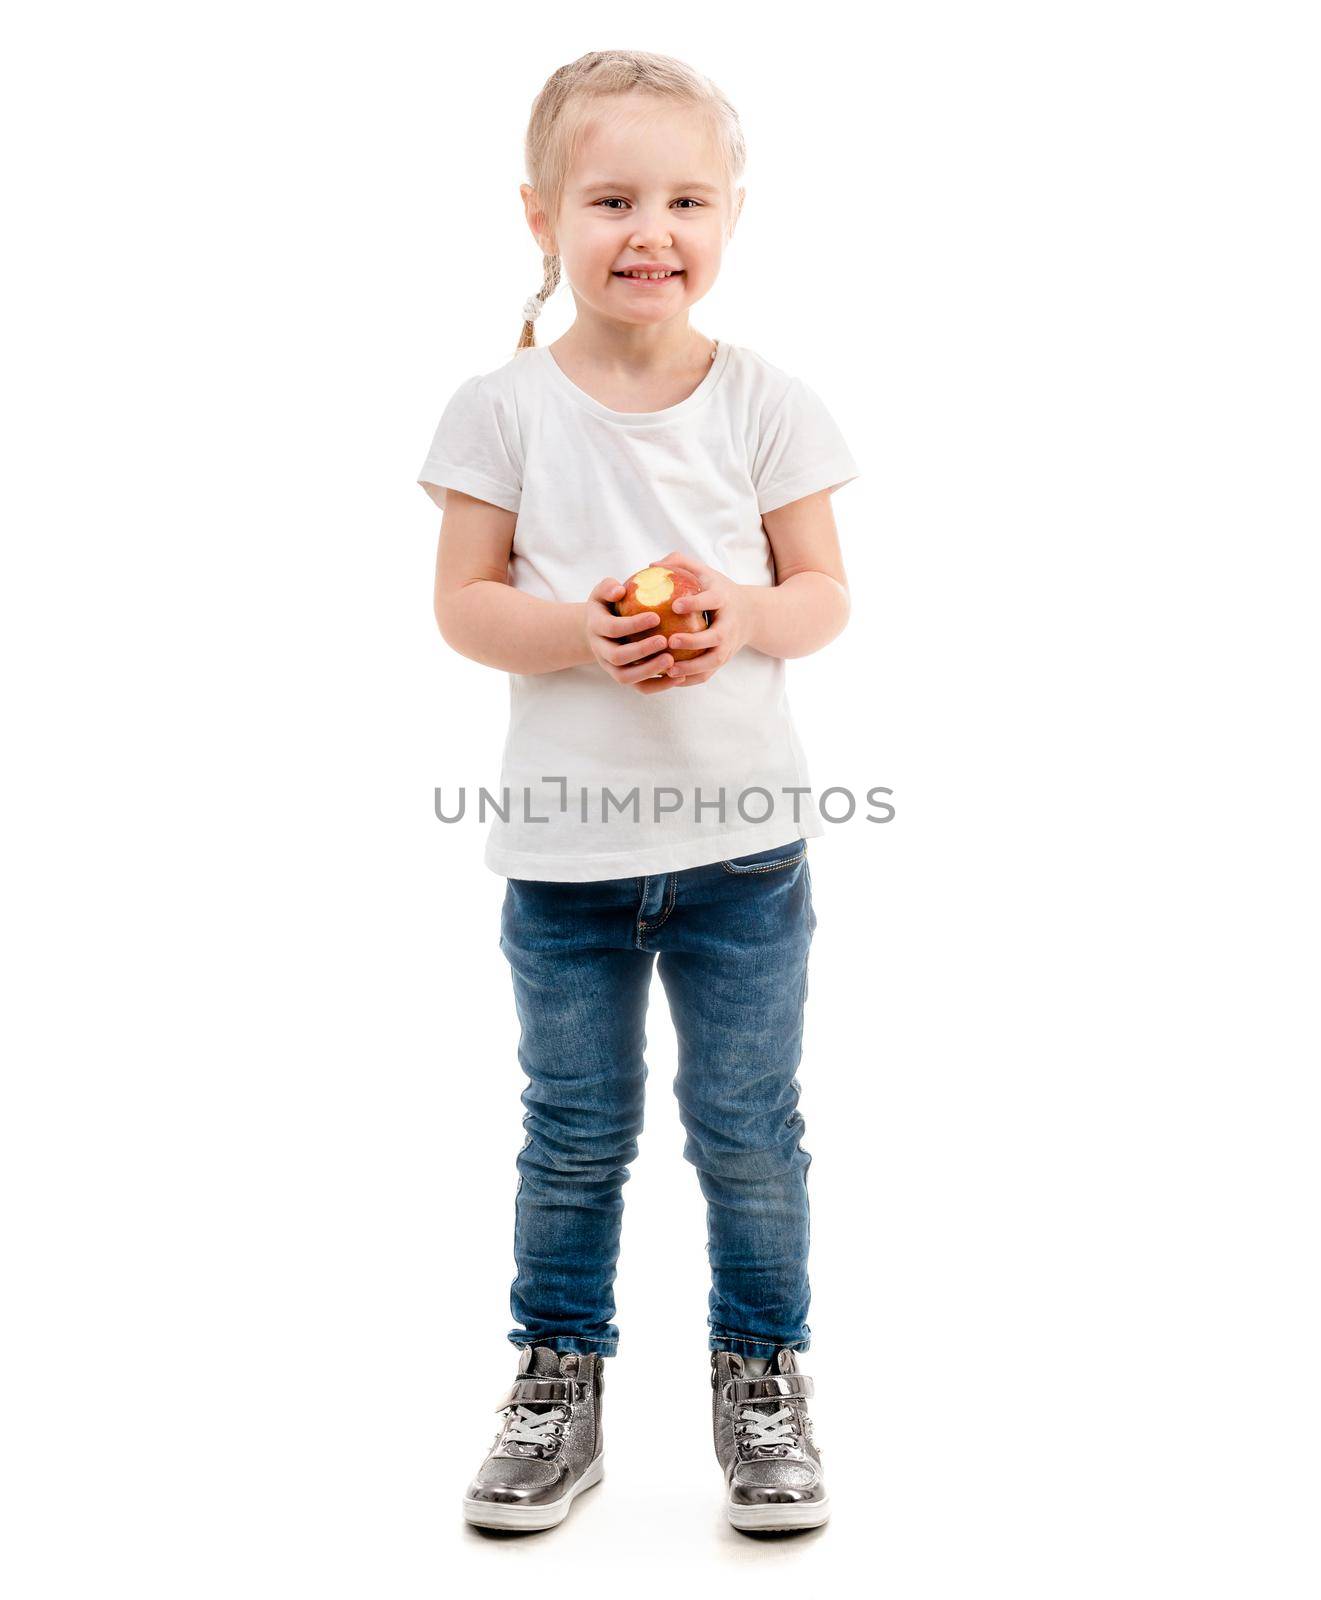 Smiling girl holding apple, isolated on white background by tan4ikk1